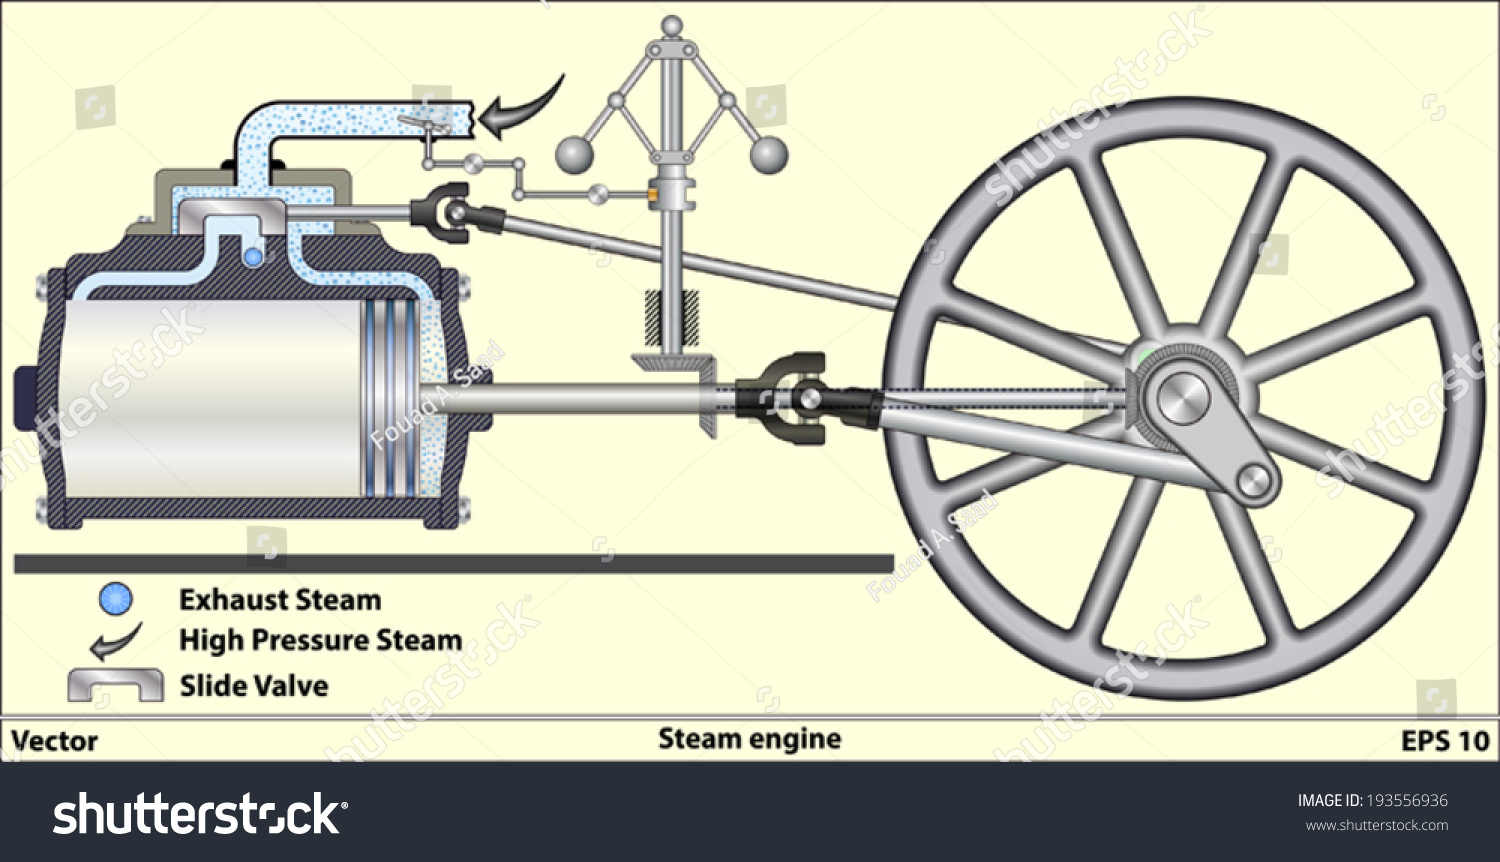 Exhaust steam pressure фото 15